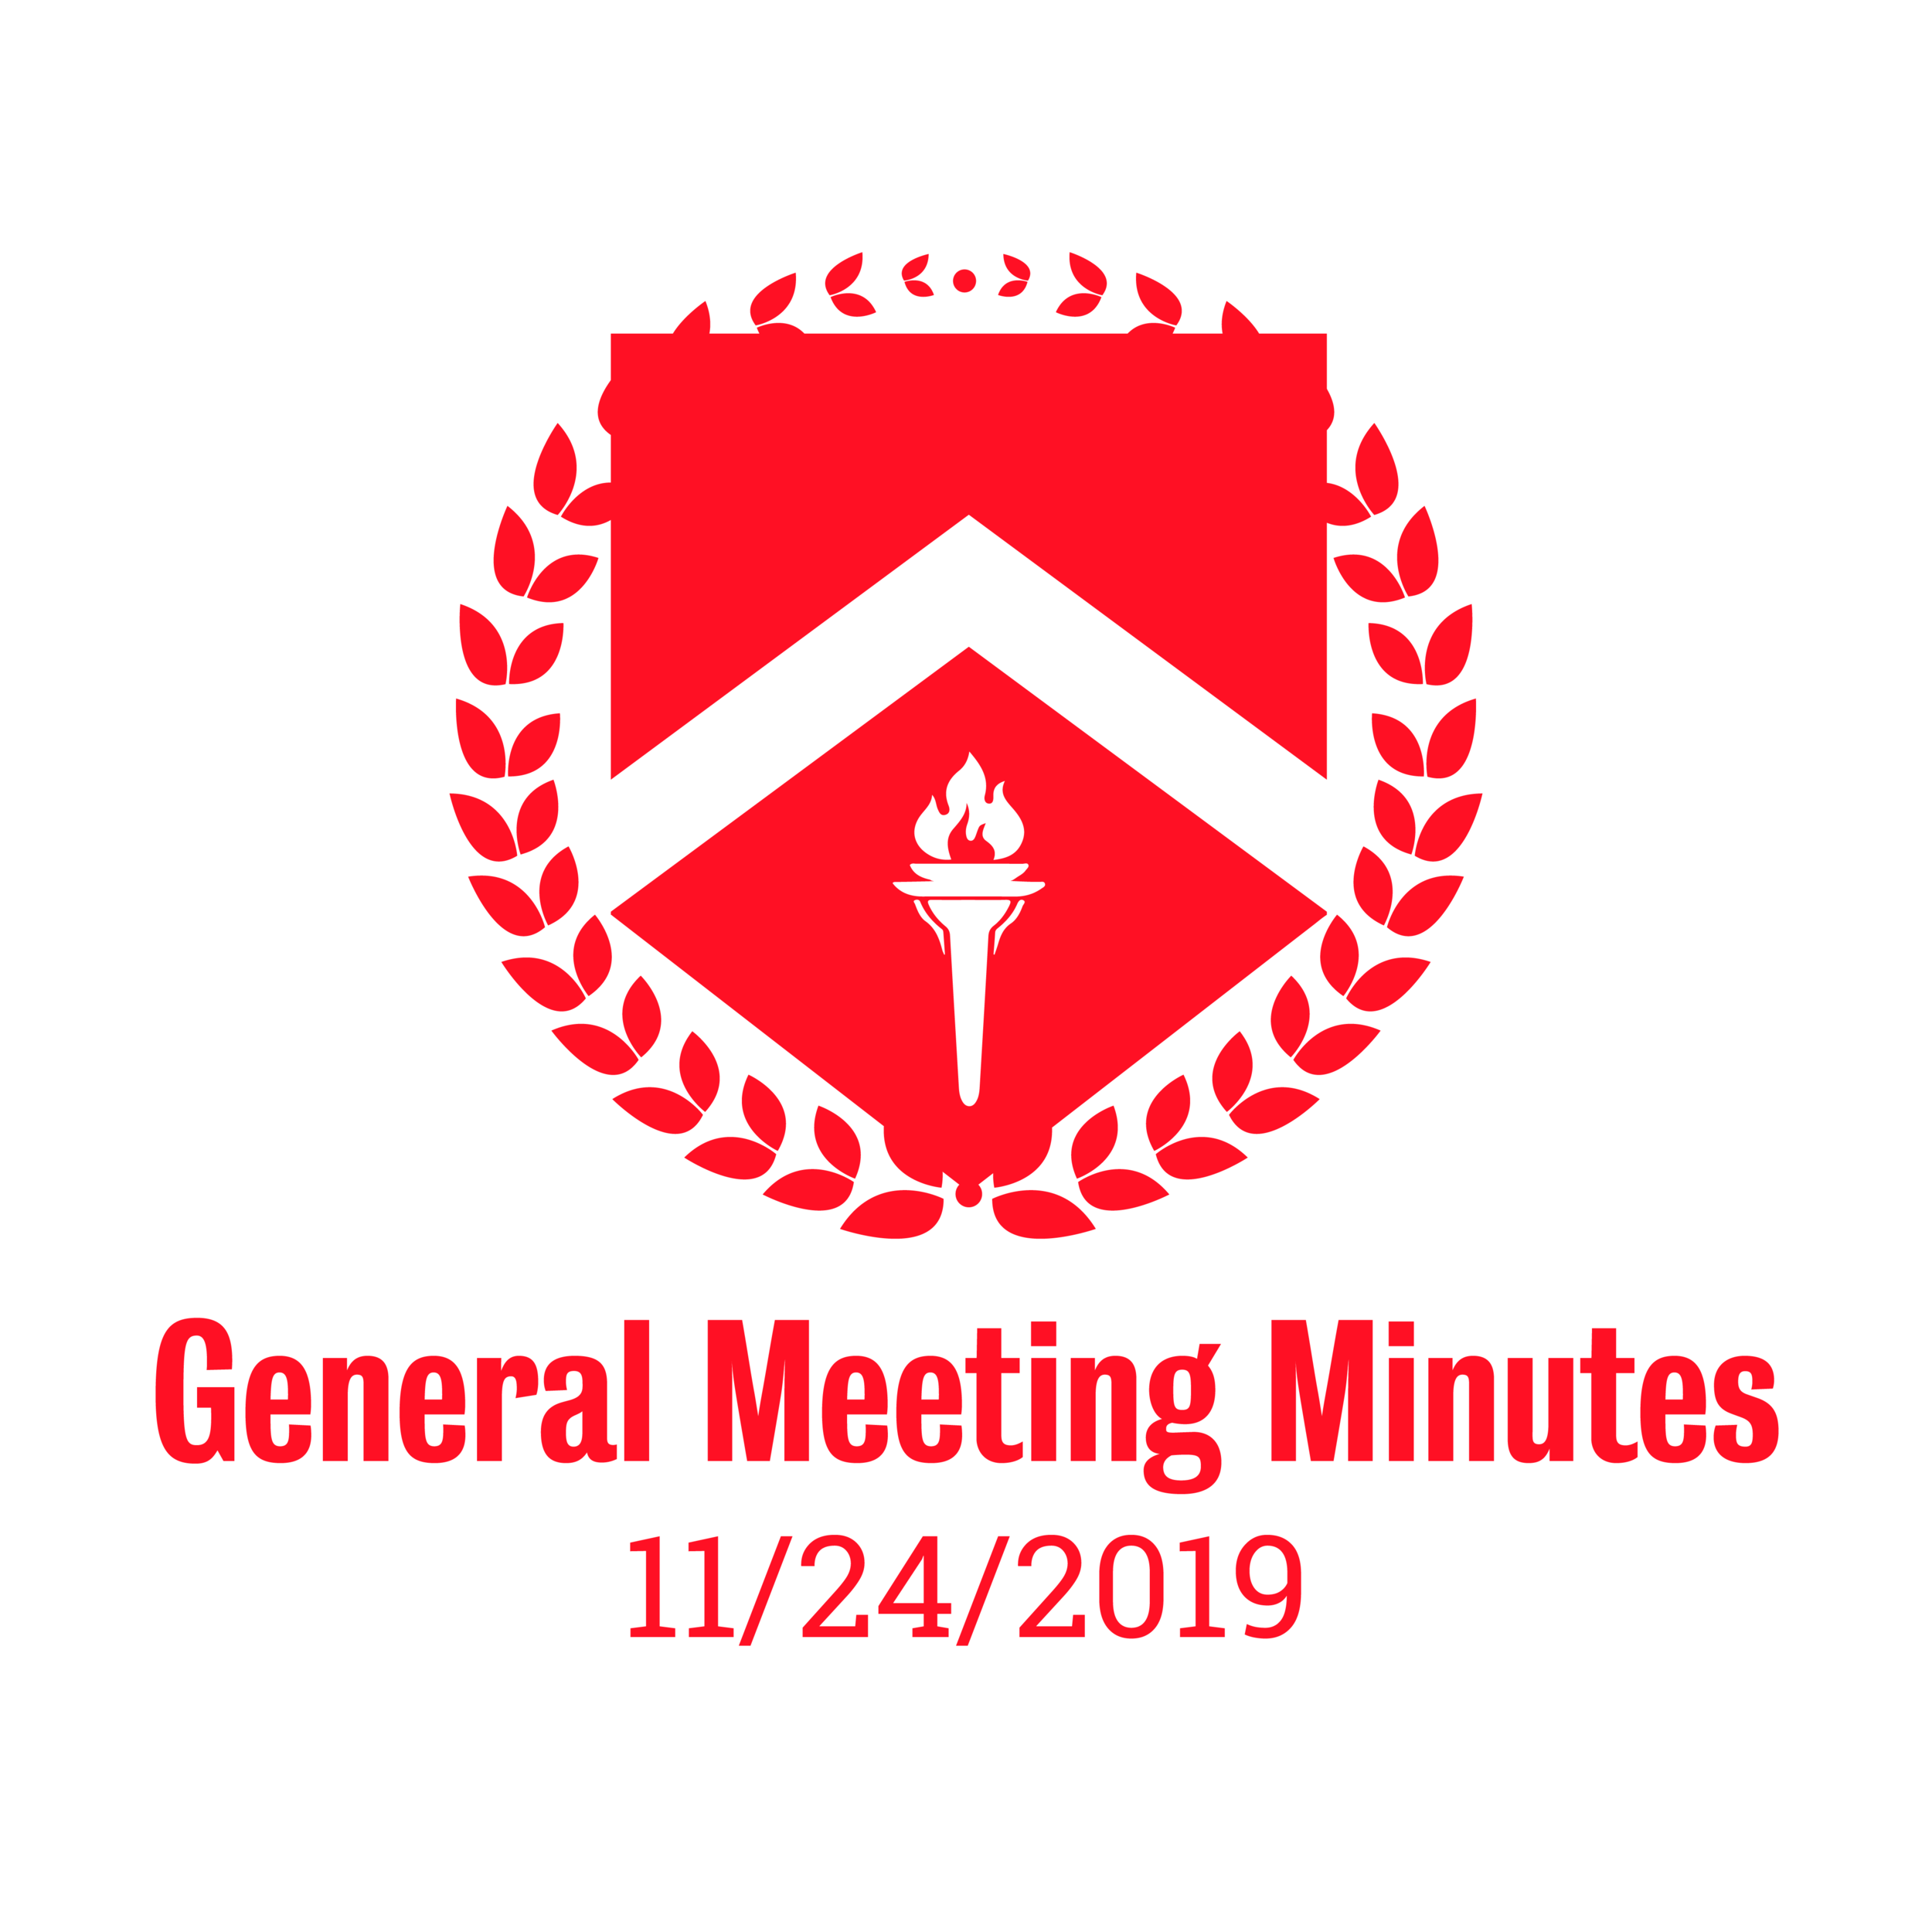 General Meeting Minutes 11/24/2019